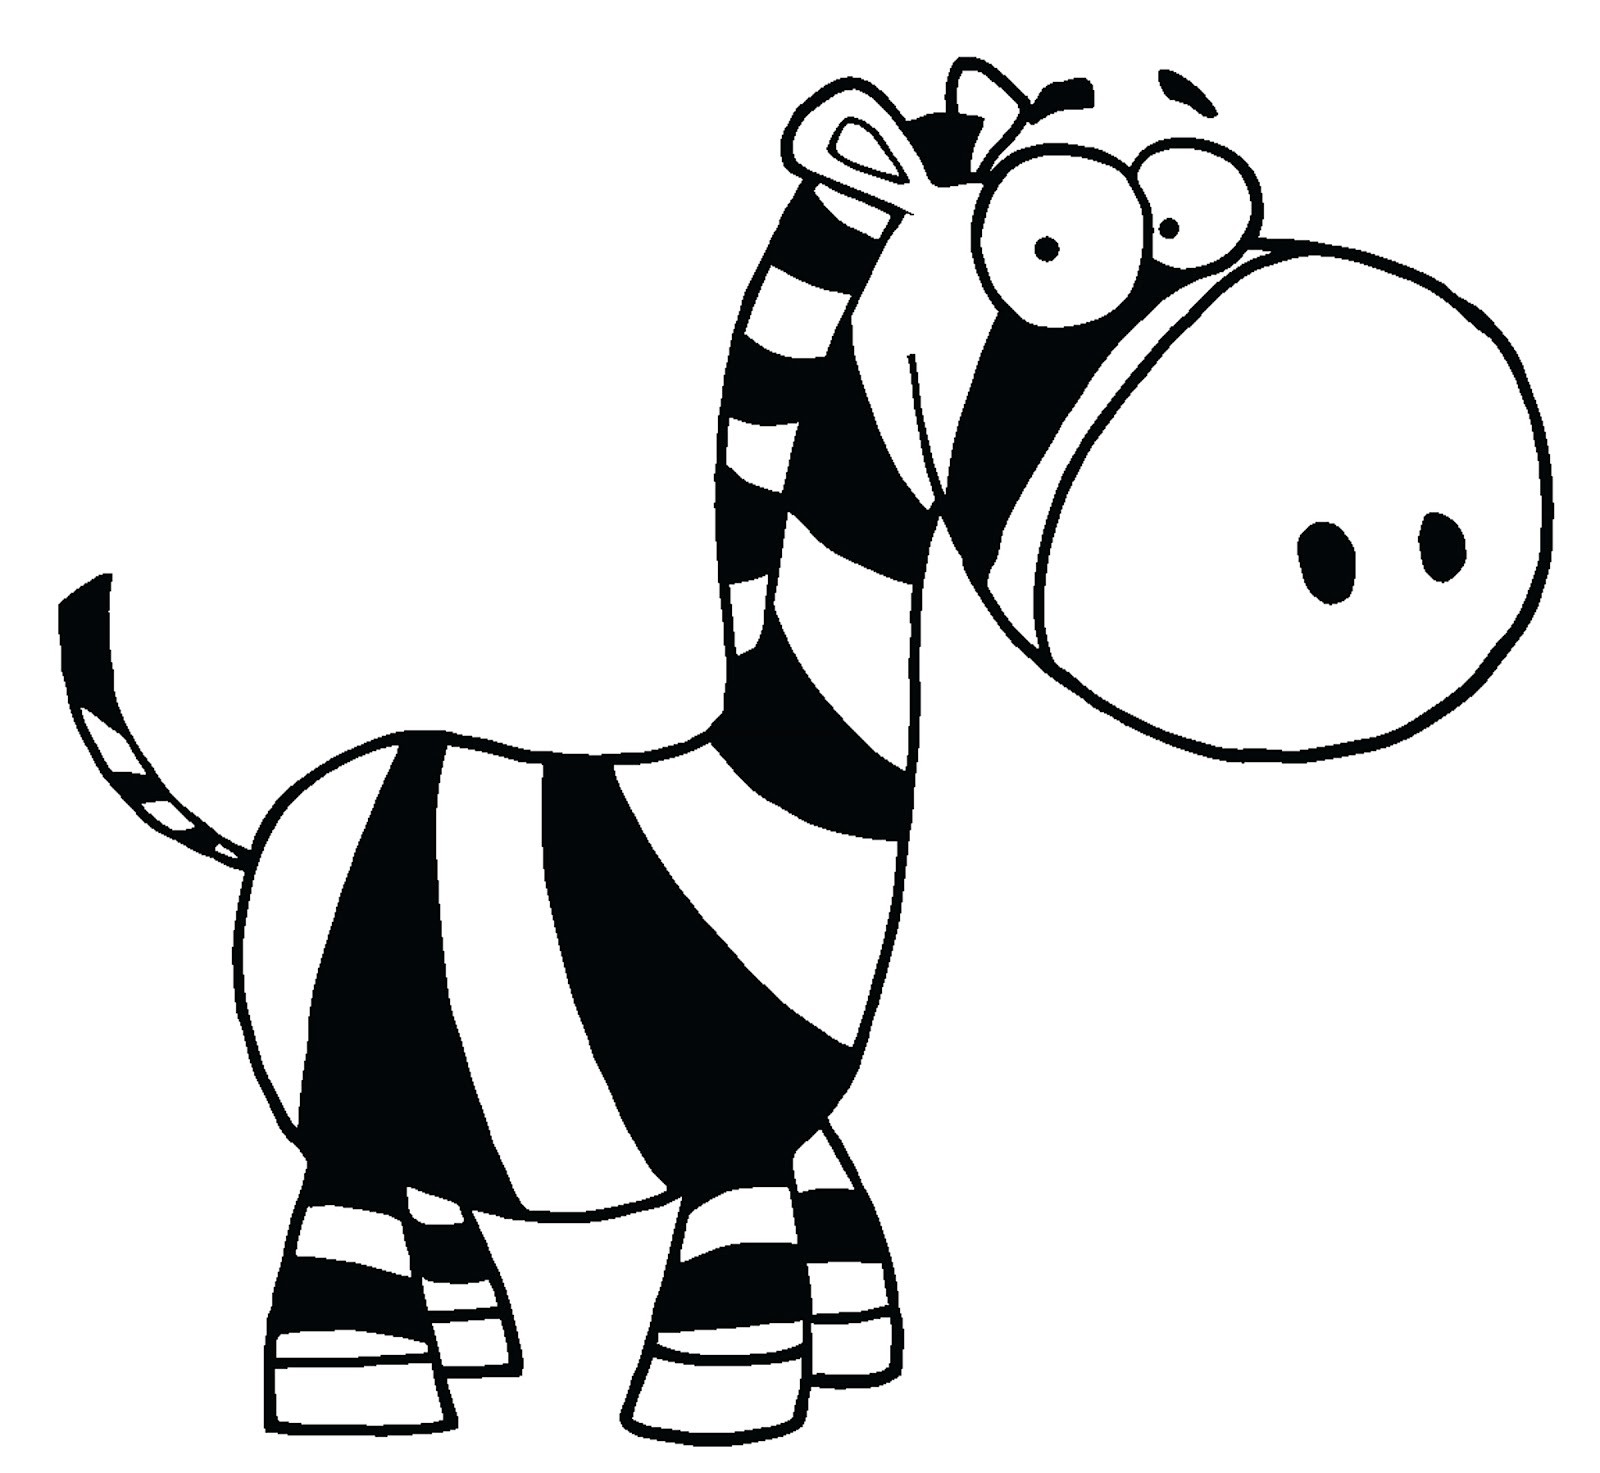 Zebra dig with 3 heads cartoon clipart